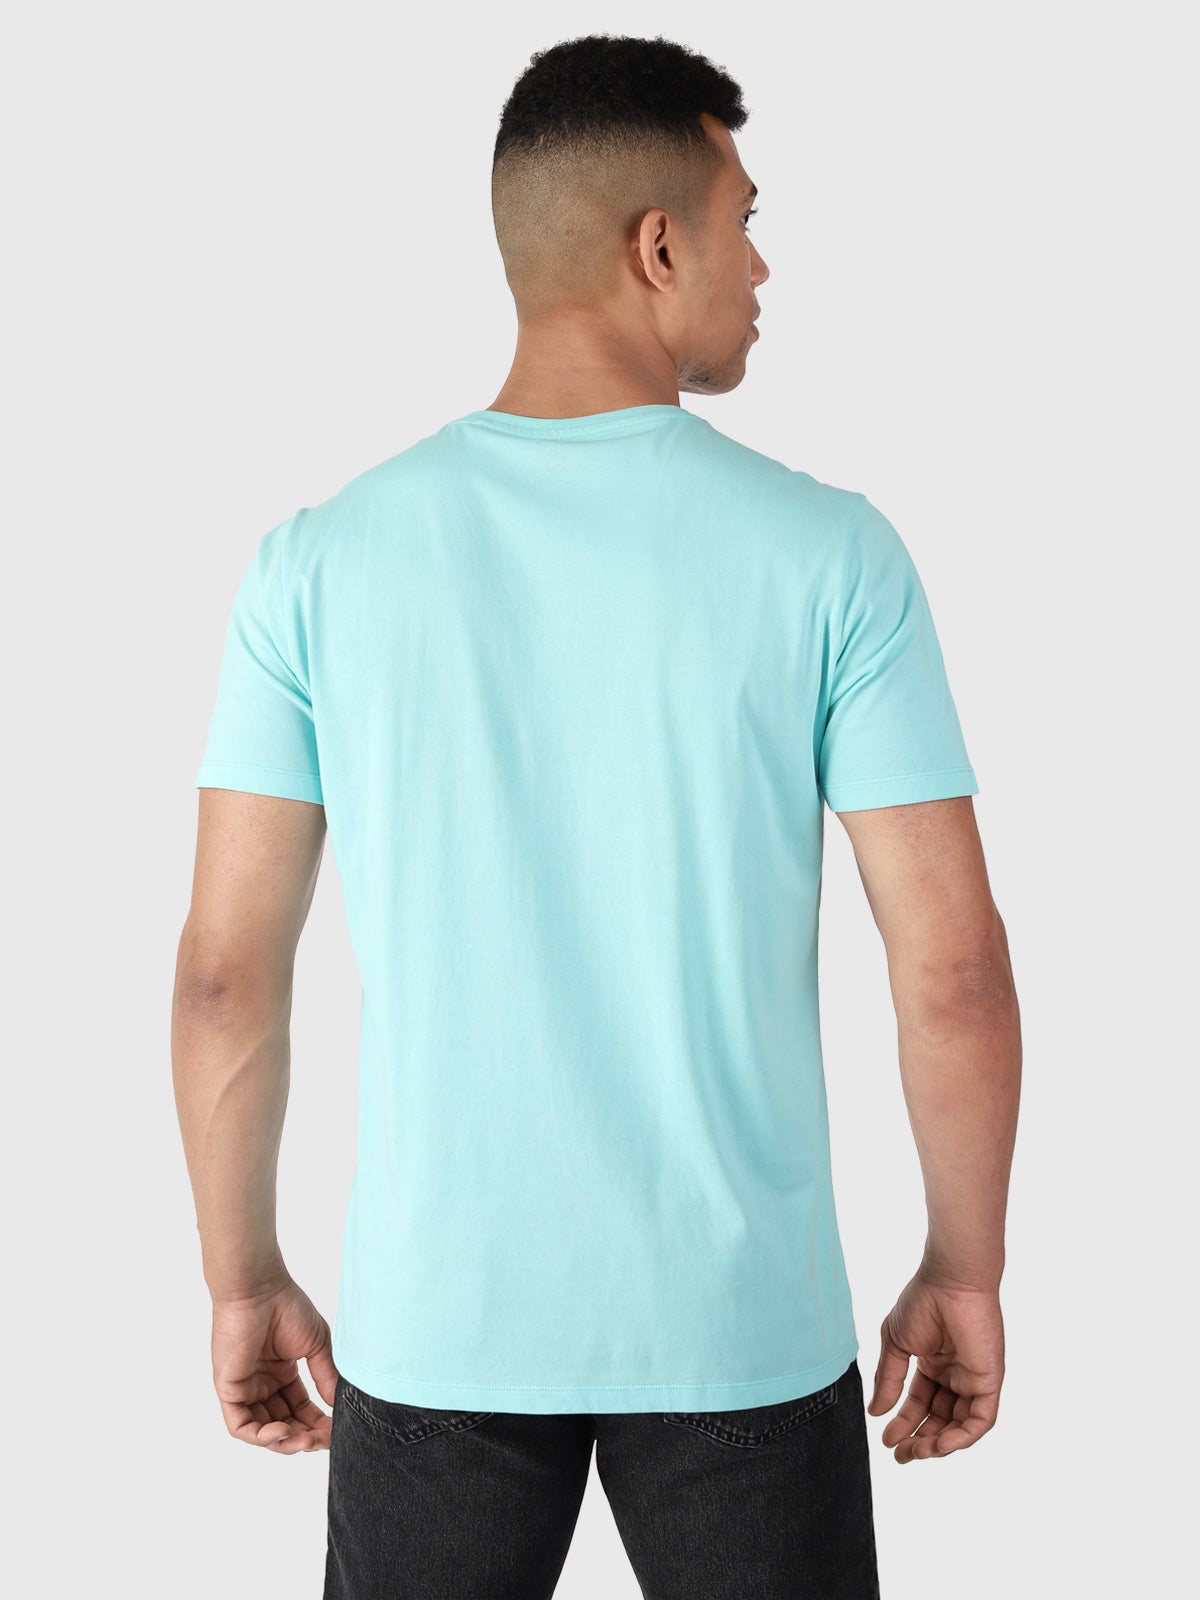 Naval-R Men T-Shirt | Blue